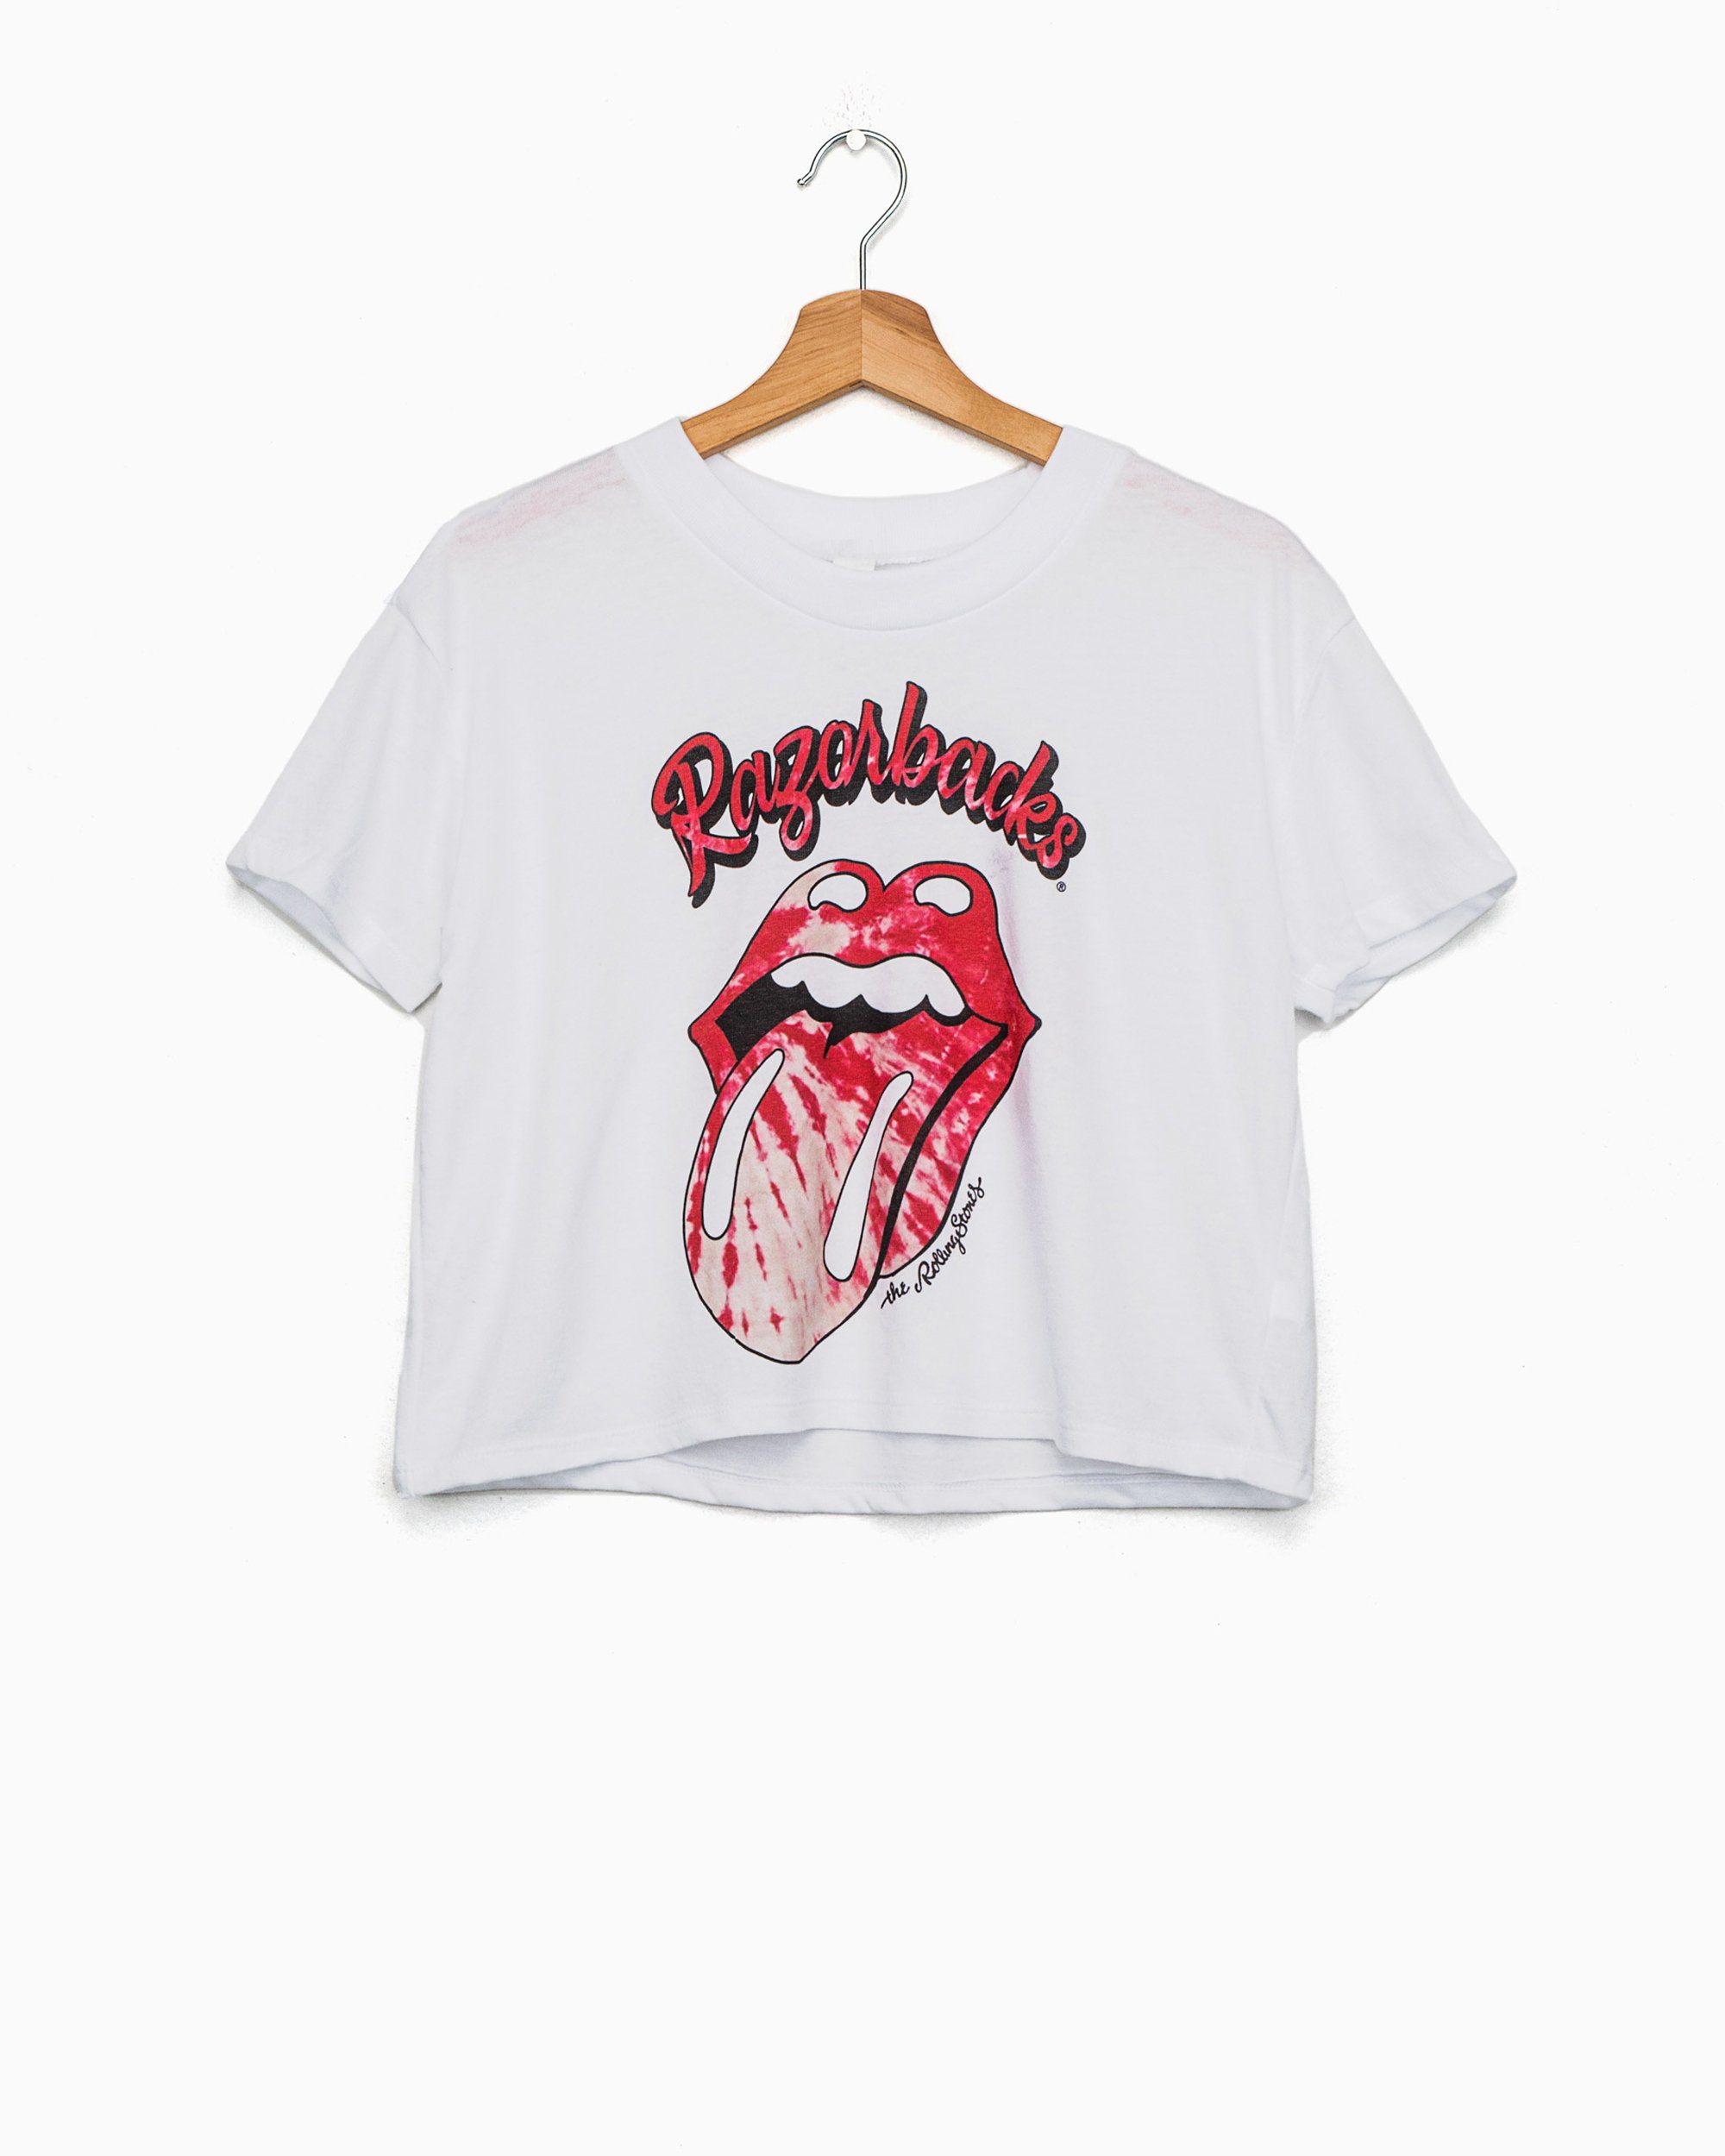 Rolling Stones Razorbacks Tie Dye Lick White Cropped Tee (4522445439079)